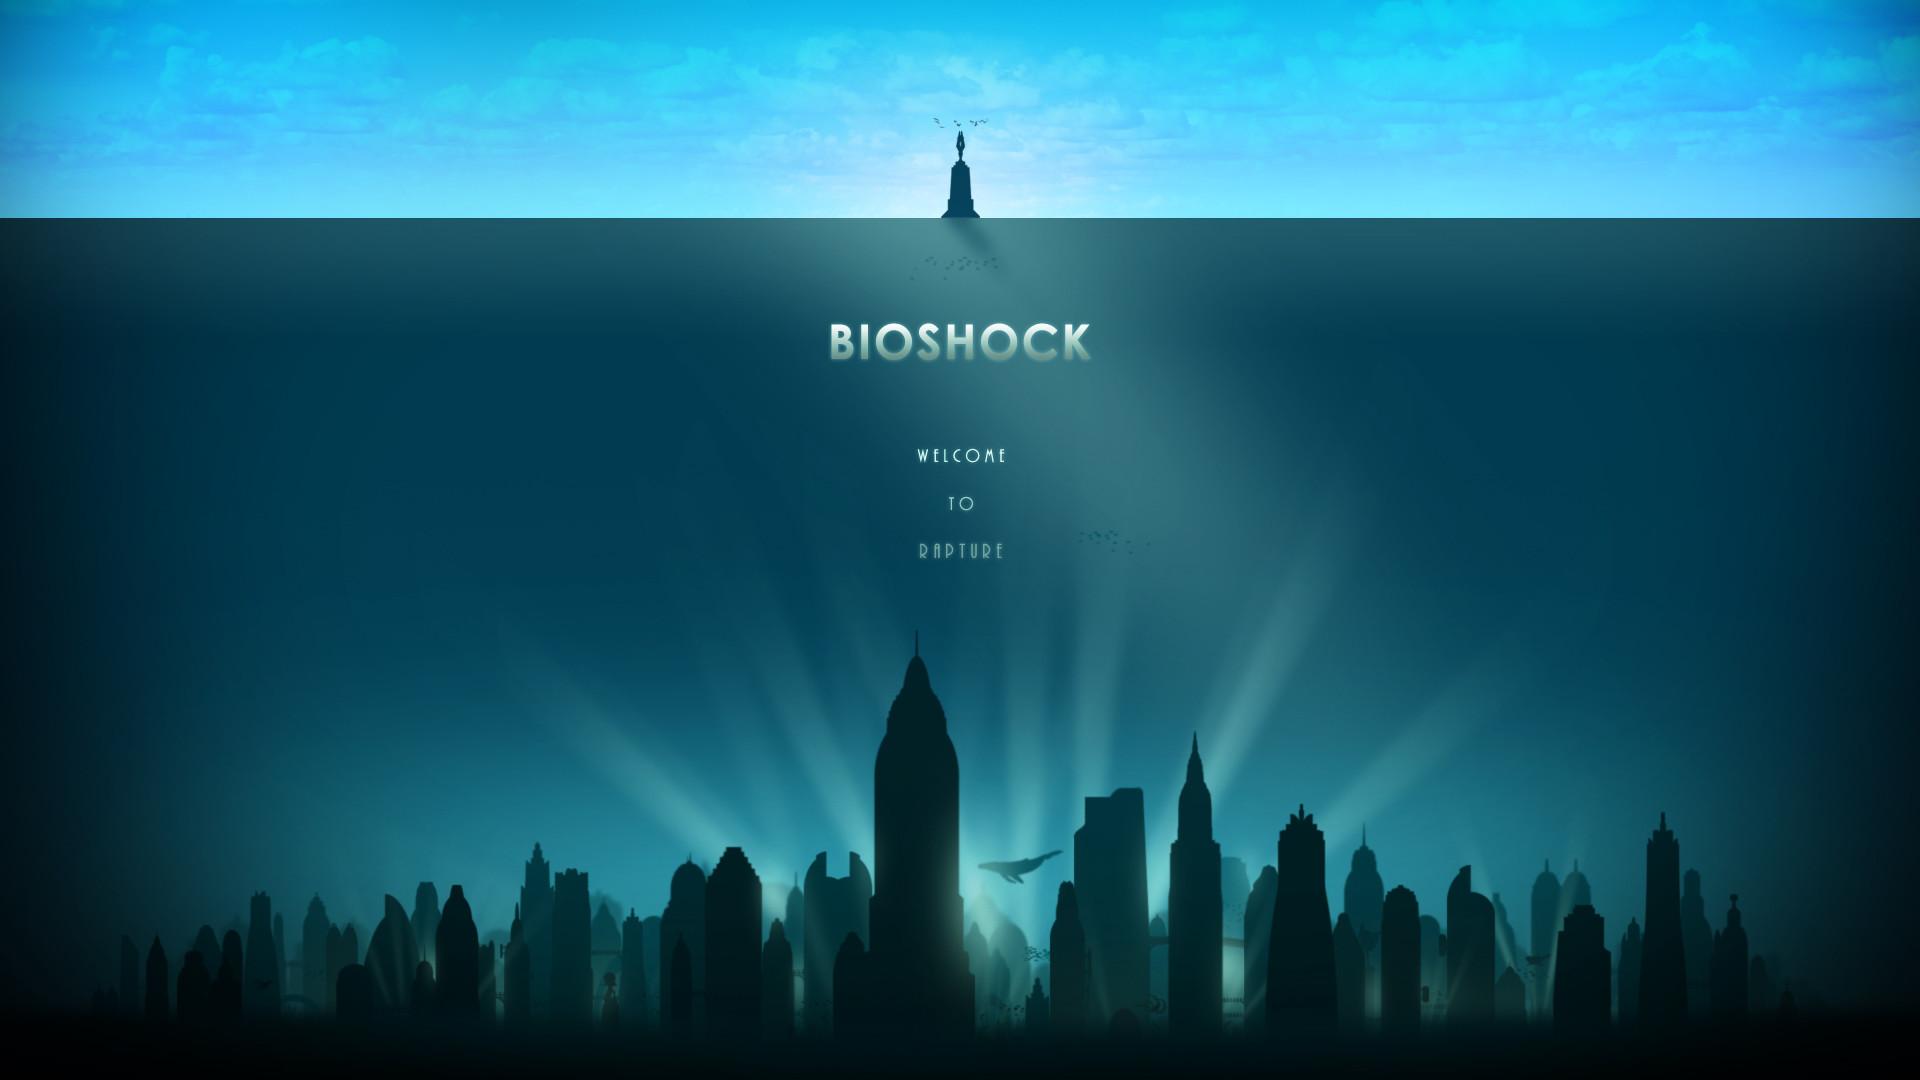 Bioshock HD Wallpapers Backgrounds Wallpaper HD Wallpapers Pinterest Bioshock, Bioshock rapture and Hd wallpaper